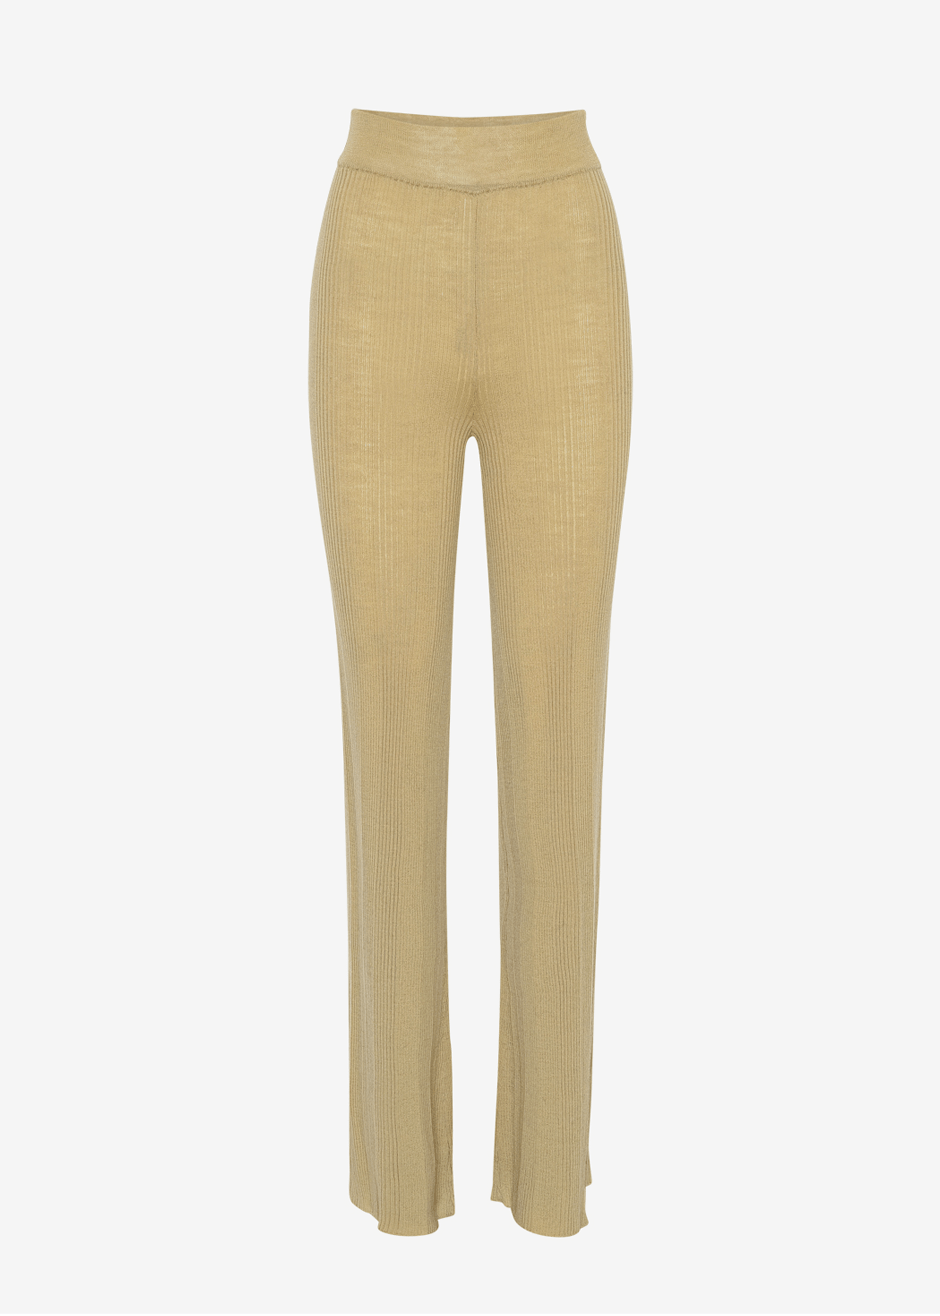 REMAIN Soleima Pants Refined Merino Wool - Sage Green - 14